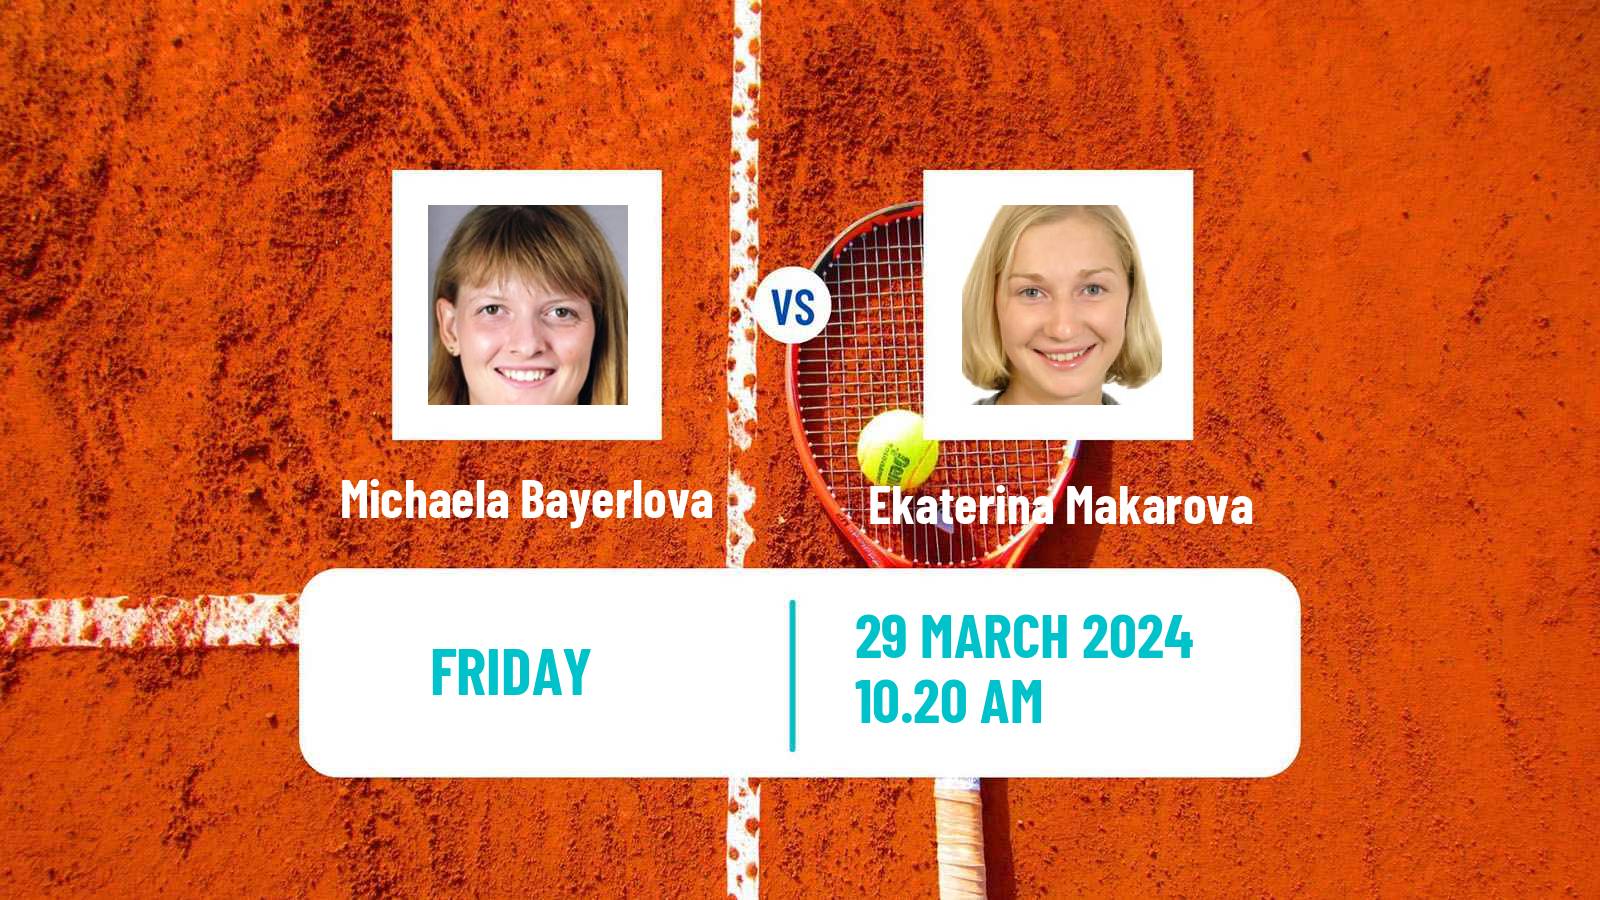 Tennis ITF W50 Sao Paulo Women Michaela Bayerlova - Ekaterina Makarova